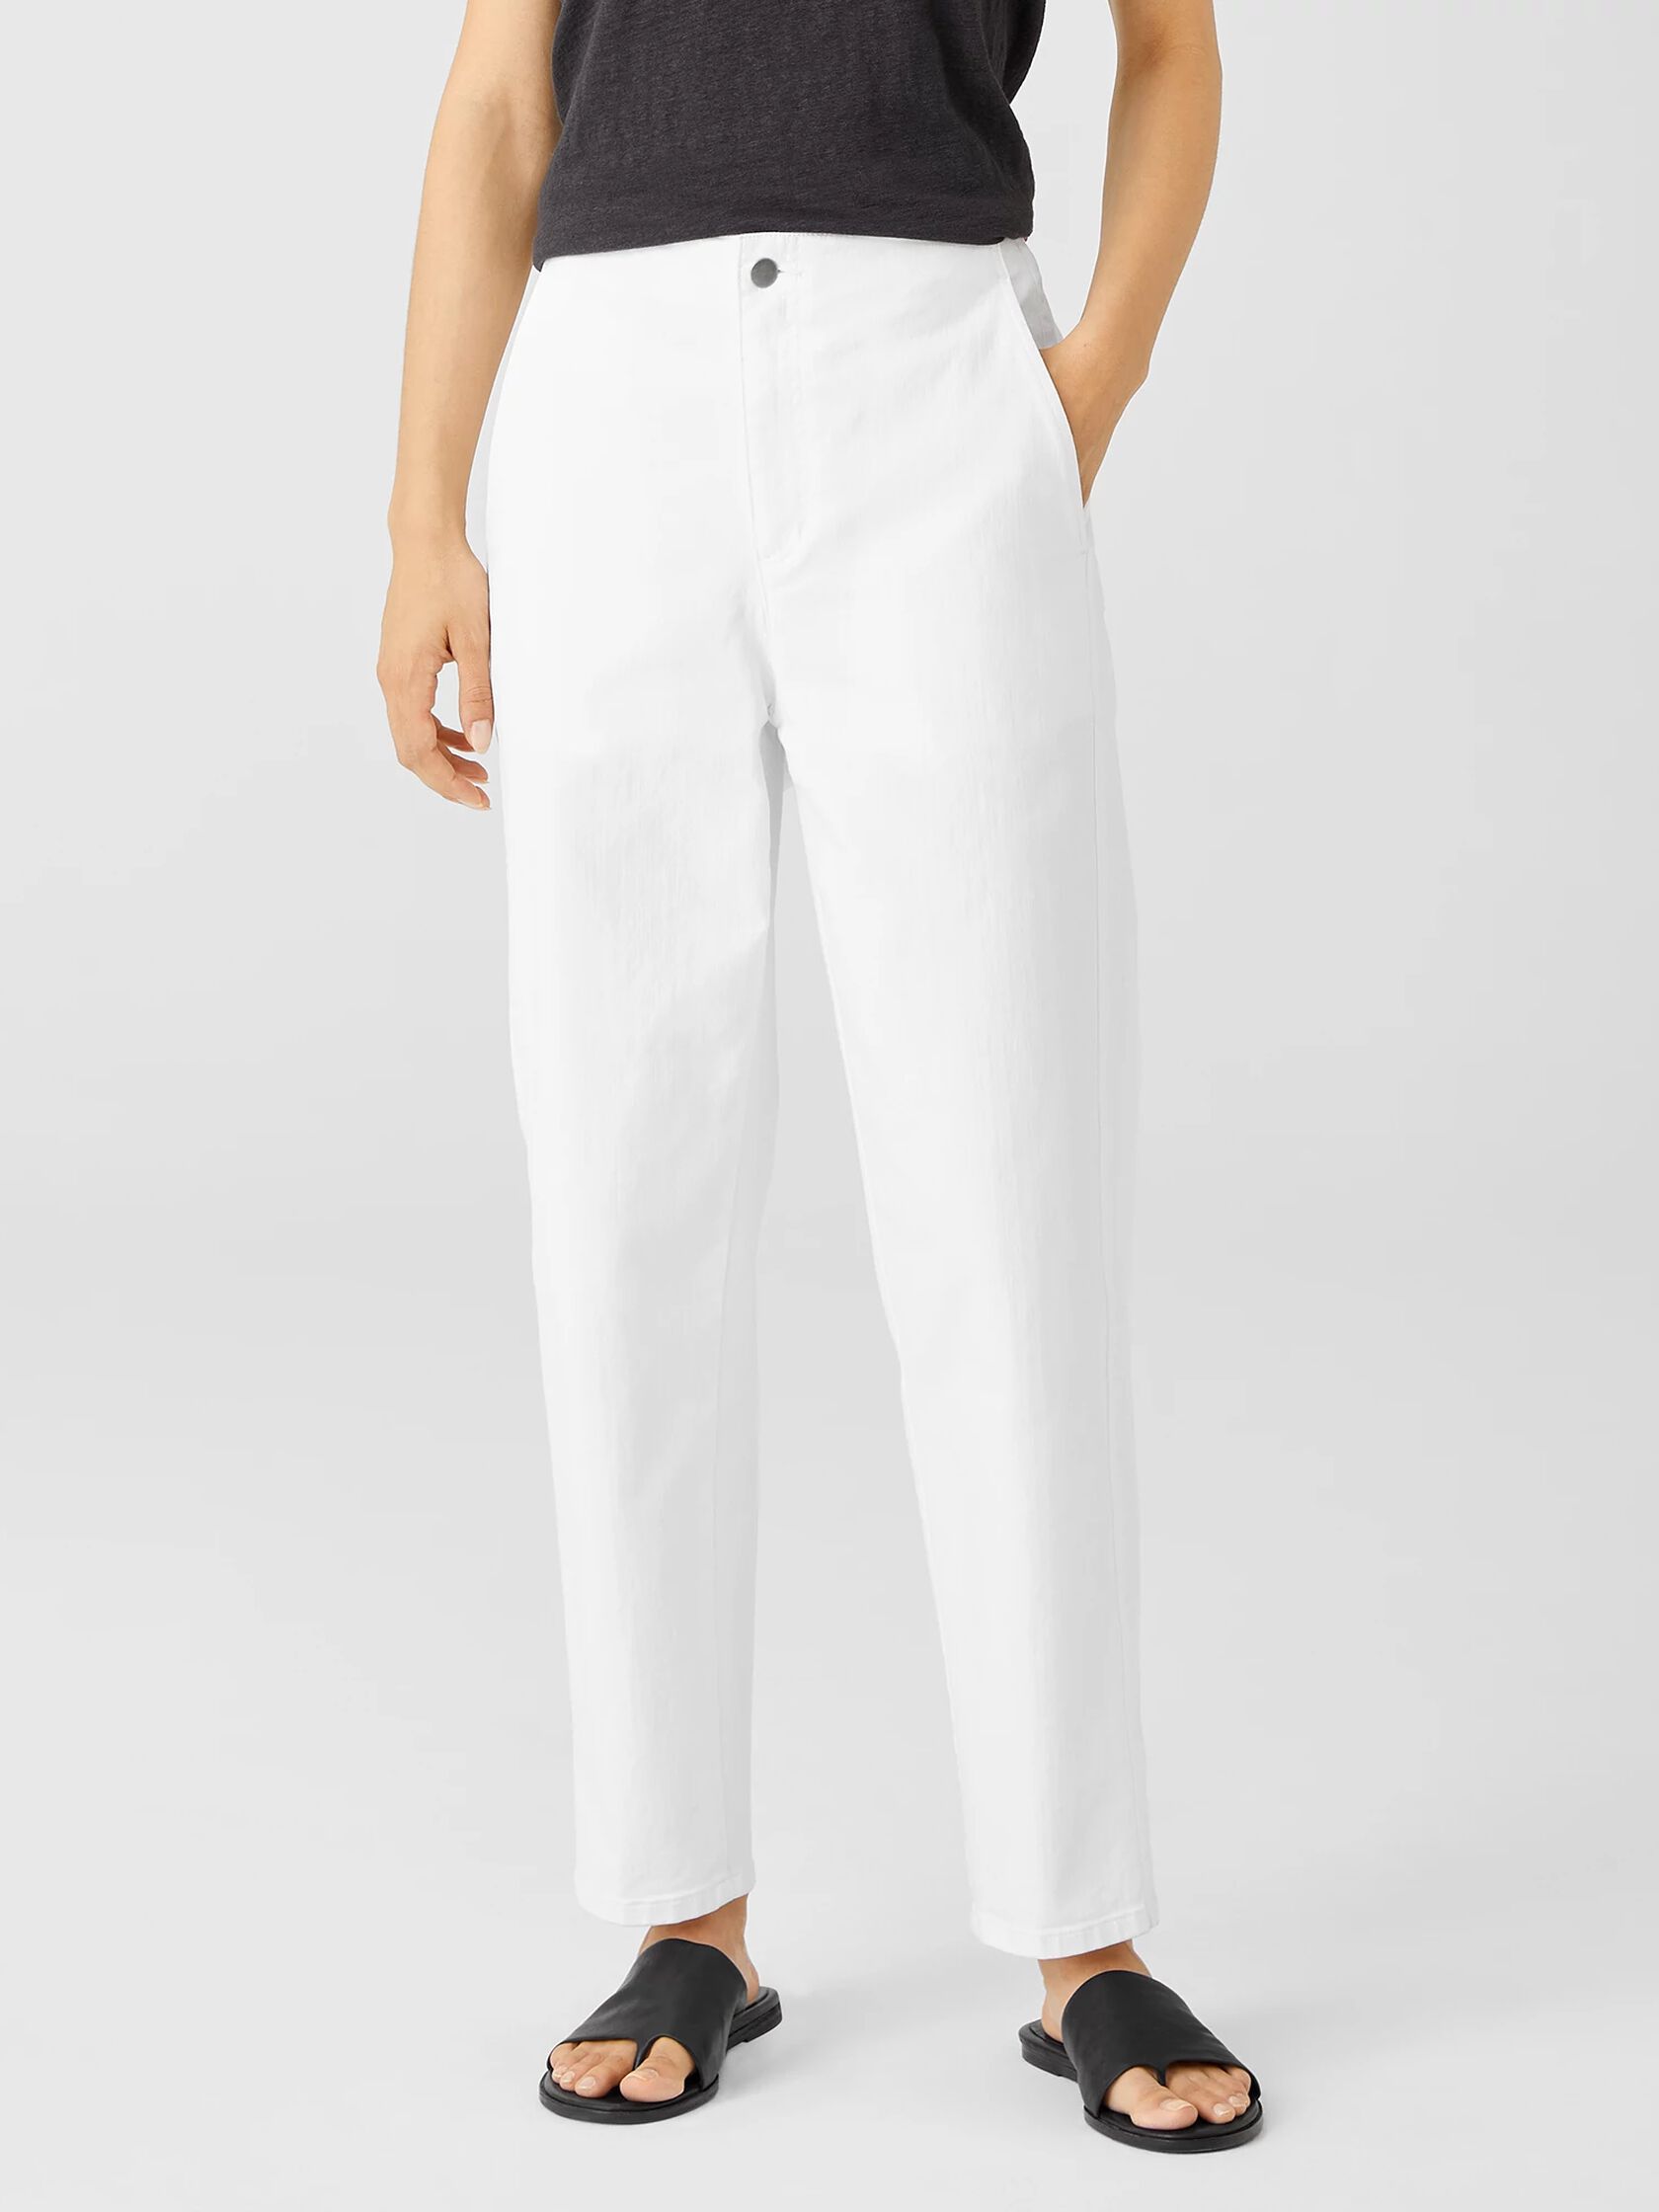 Womens Pants Blue White Design Denim Classic Fit Basic Editions 6 8 10 14  16 NWT